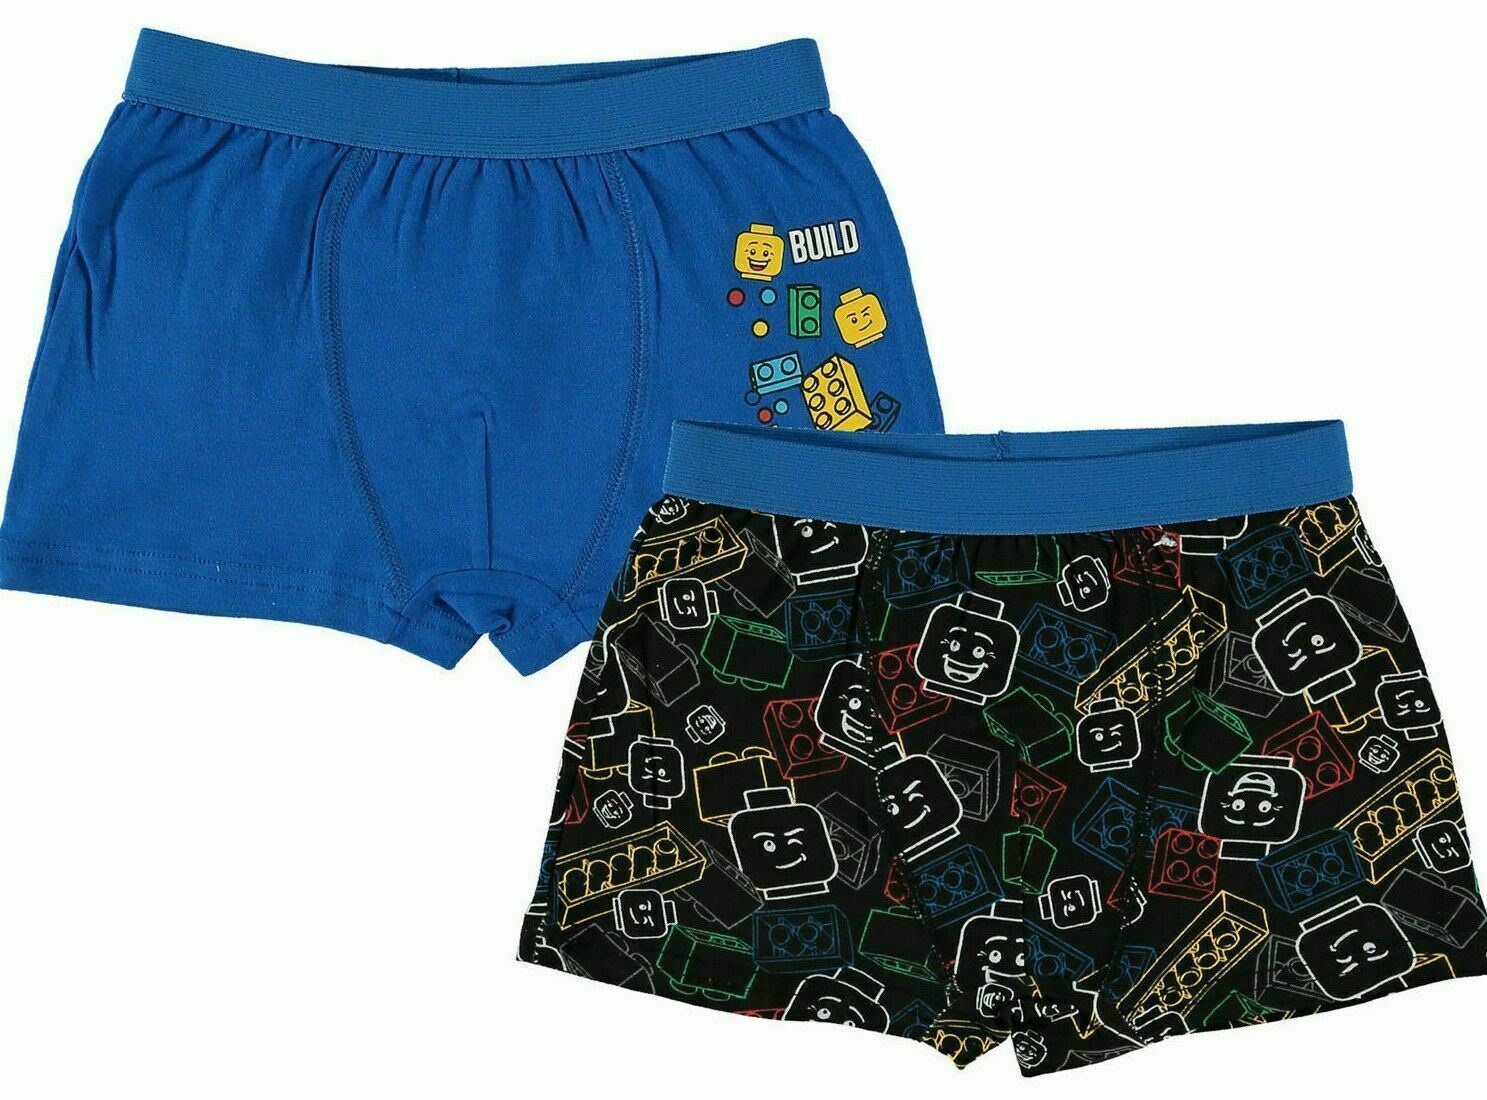 LEGO Boys' 2-pk Boxer Briefs, Underwear, Blue/Black Printed, size 6 Years